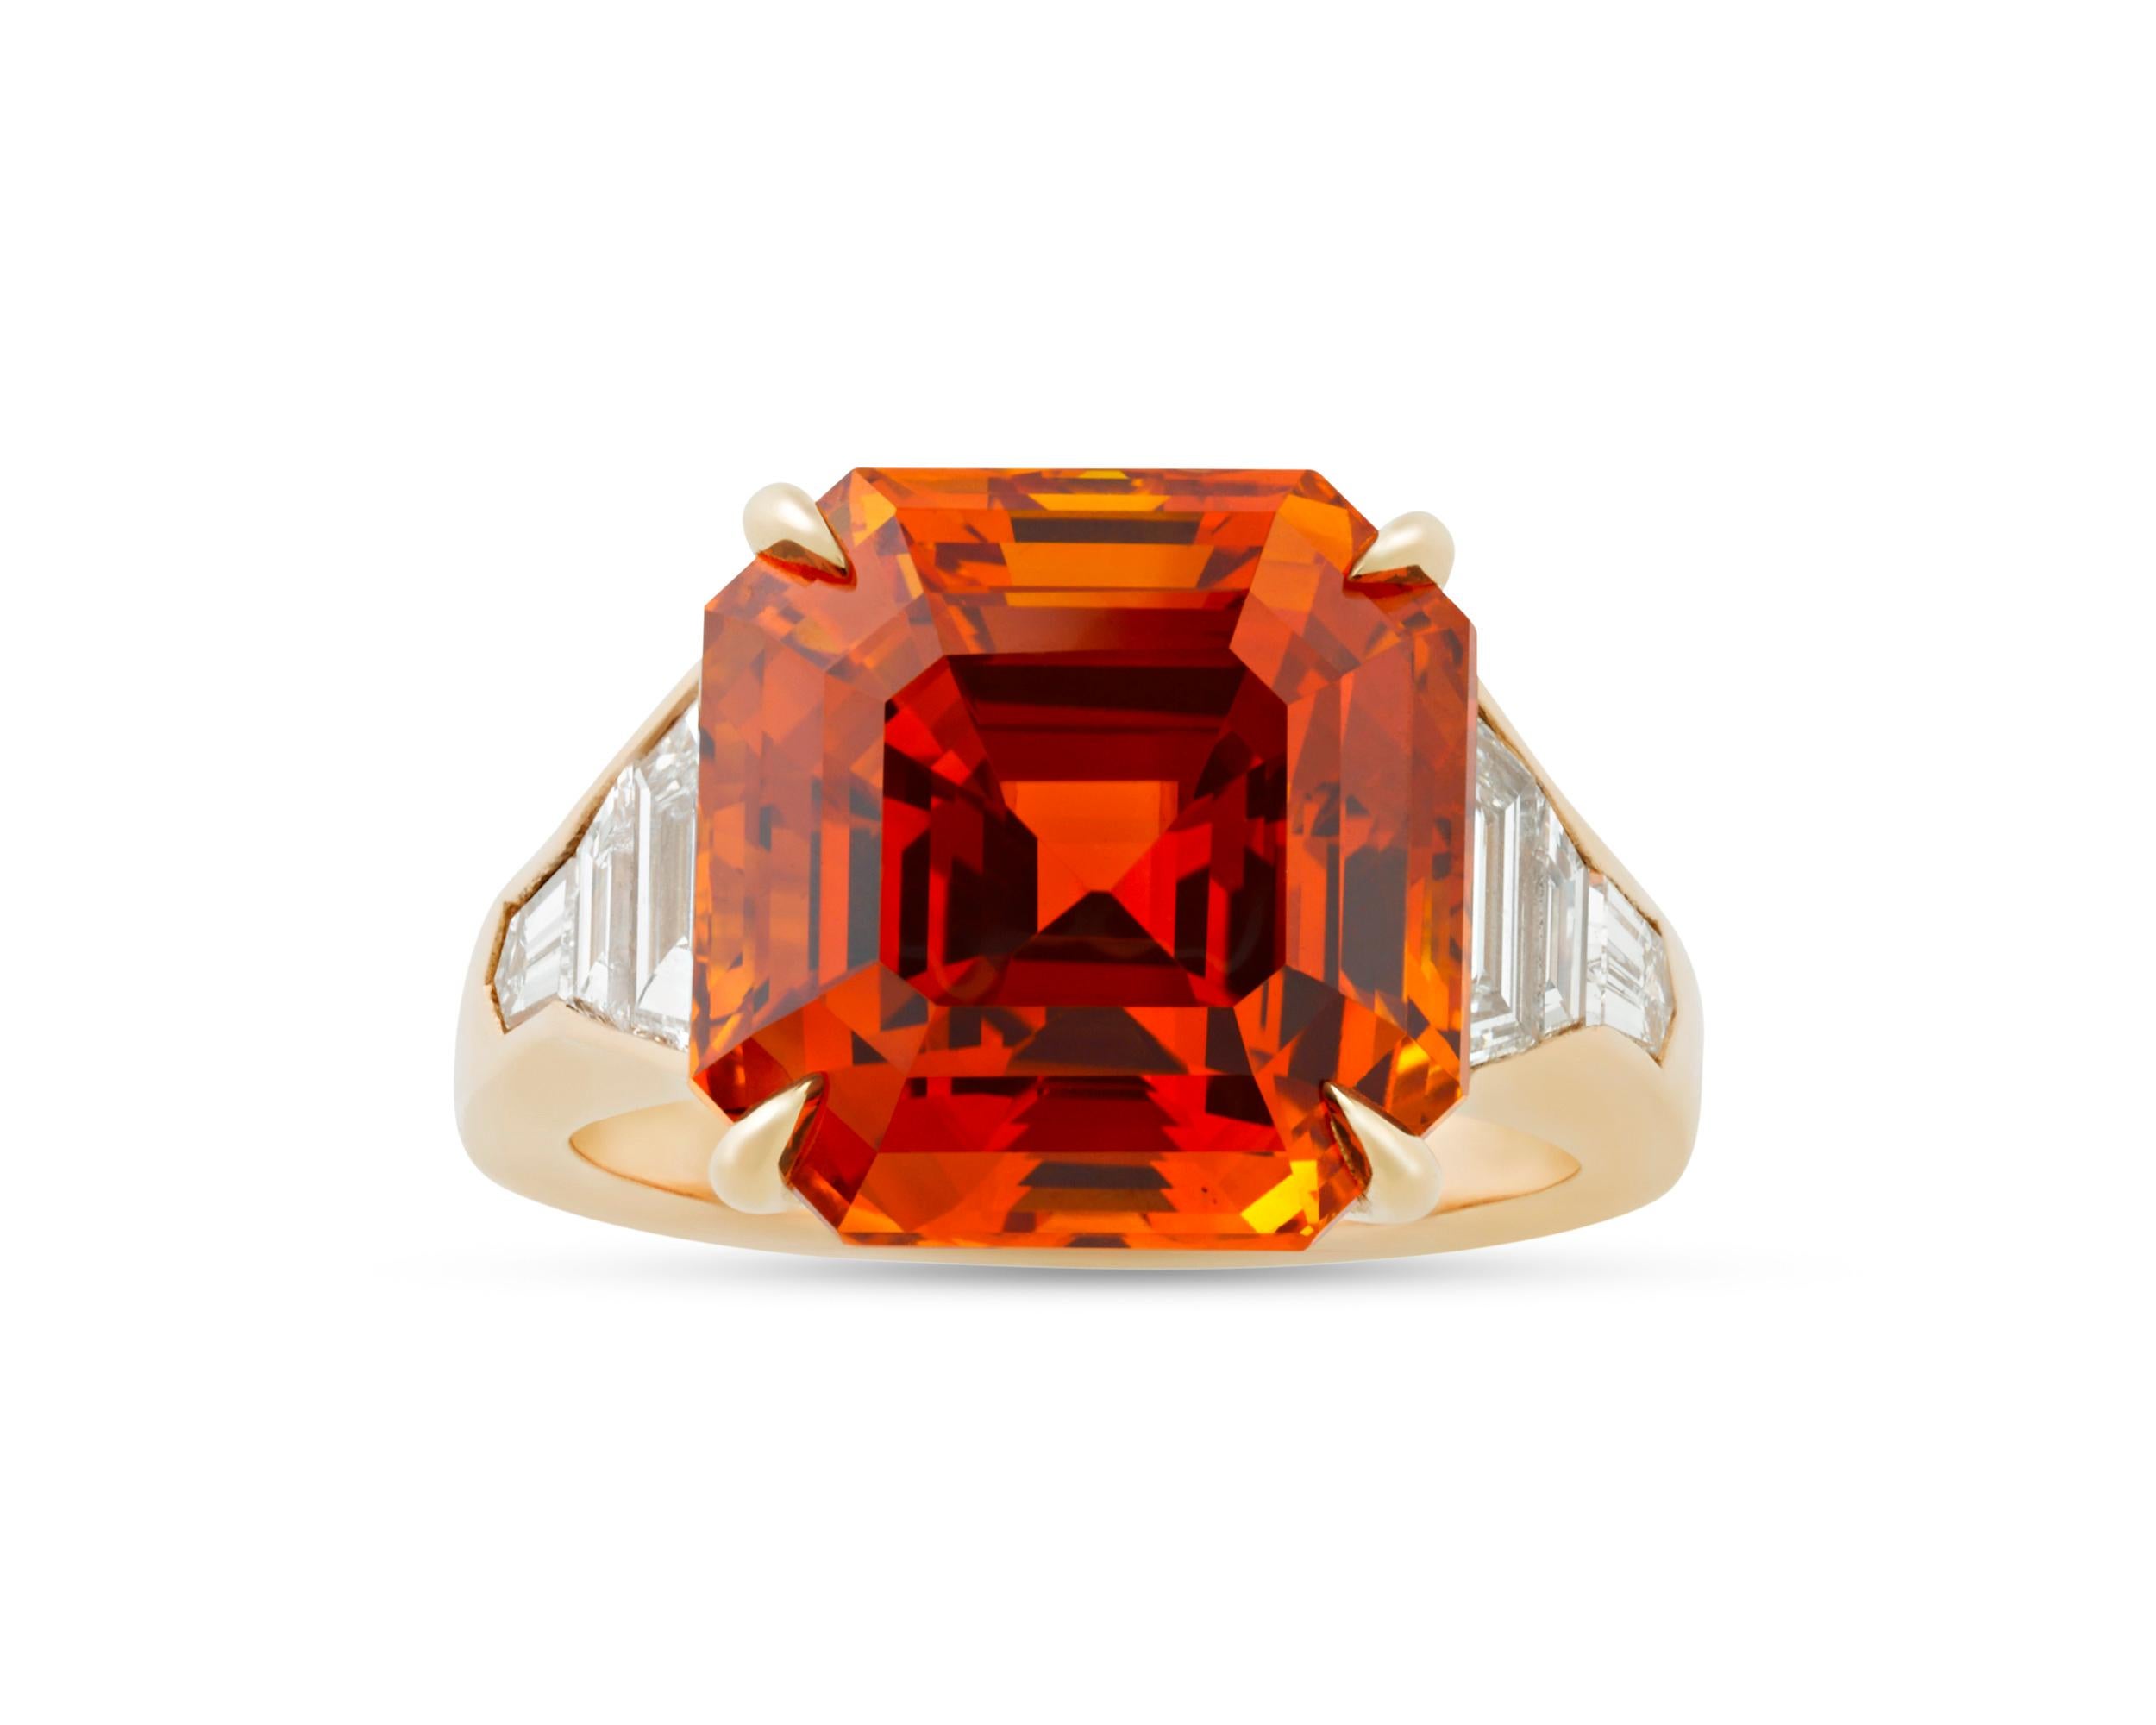 Octagon Cut Orange Ceylon Sapphire Ring, 14.12 Carats